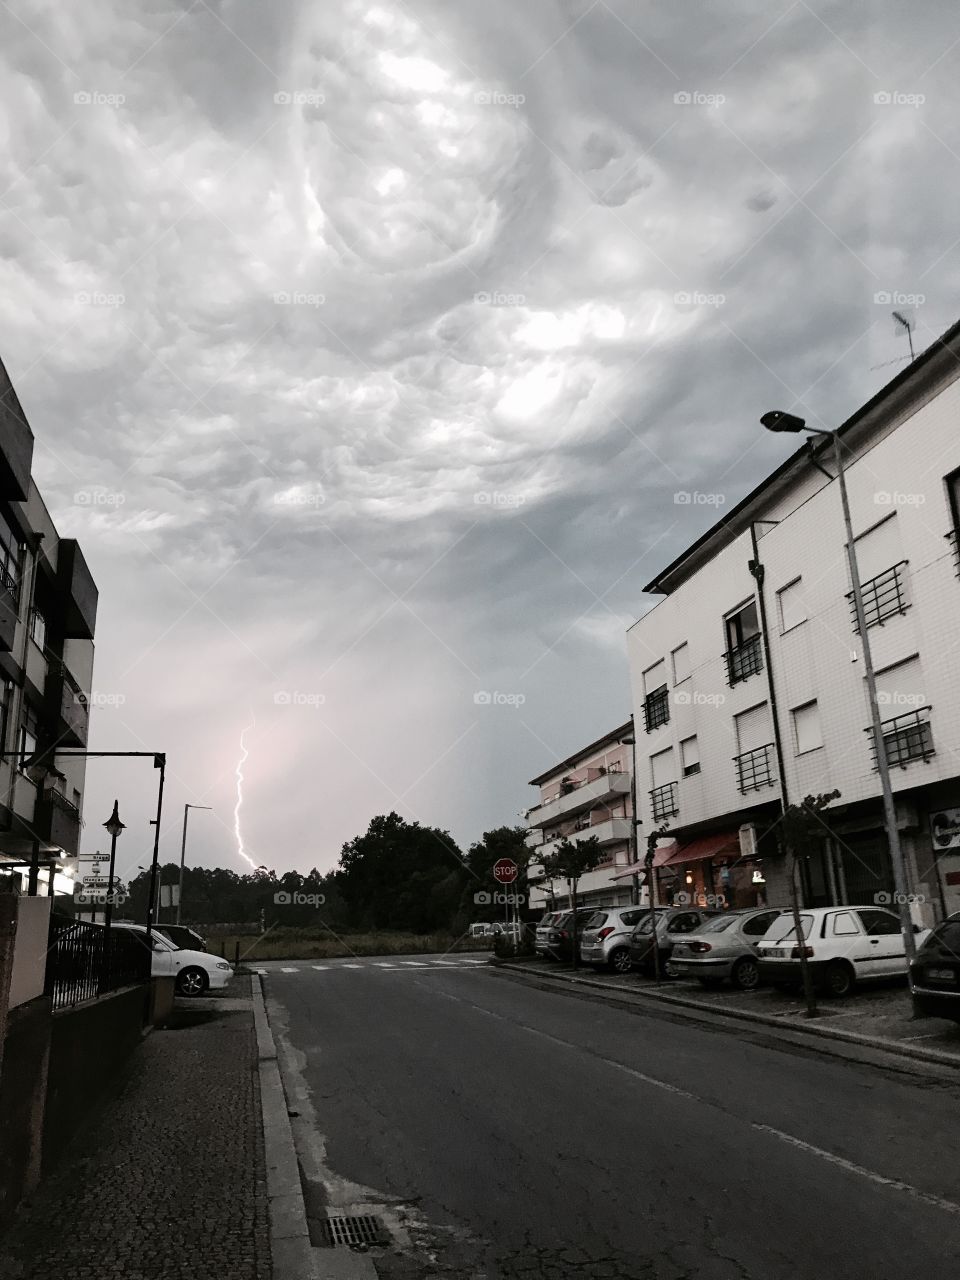 Storm 